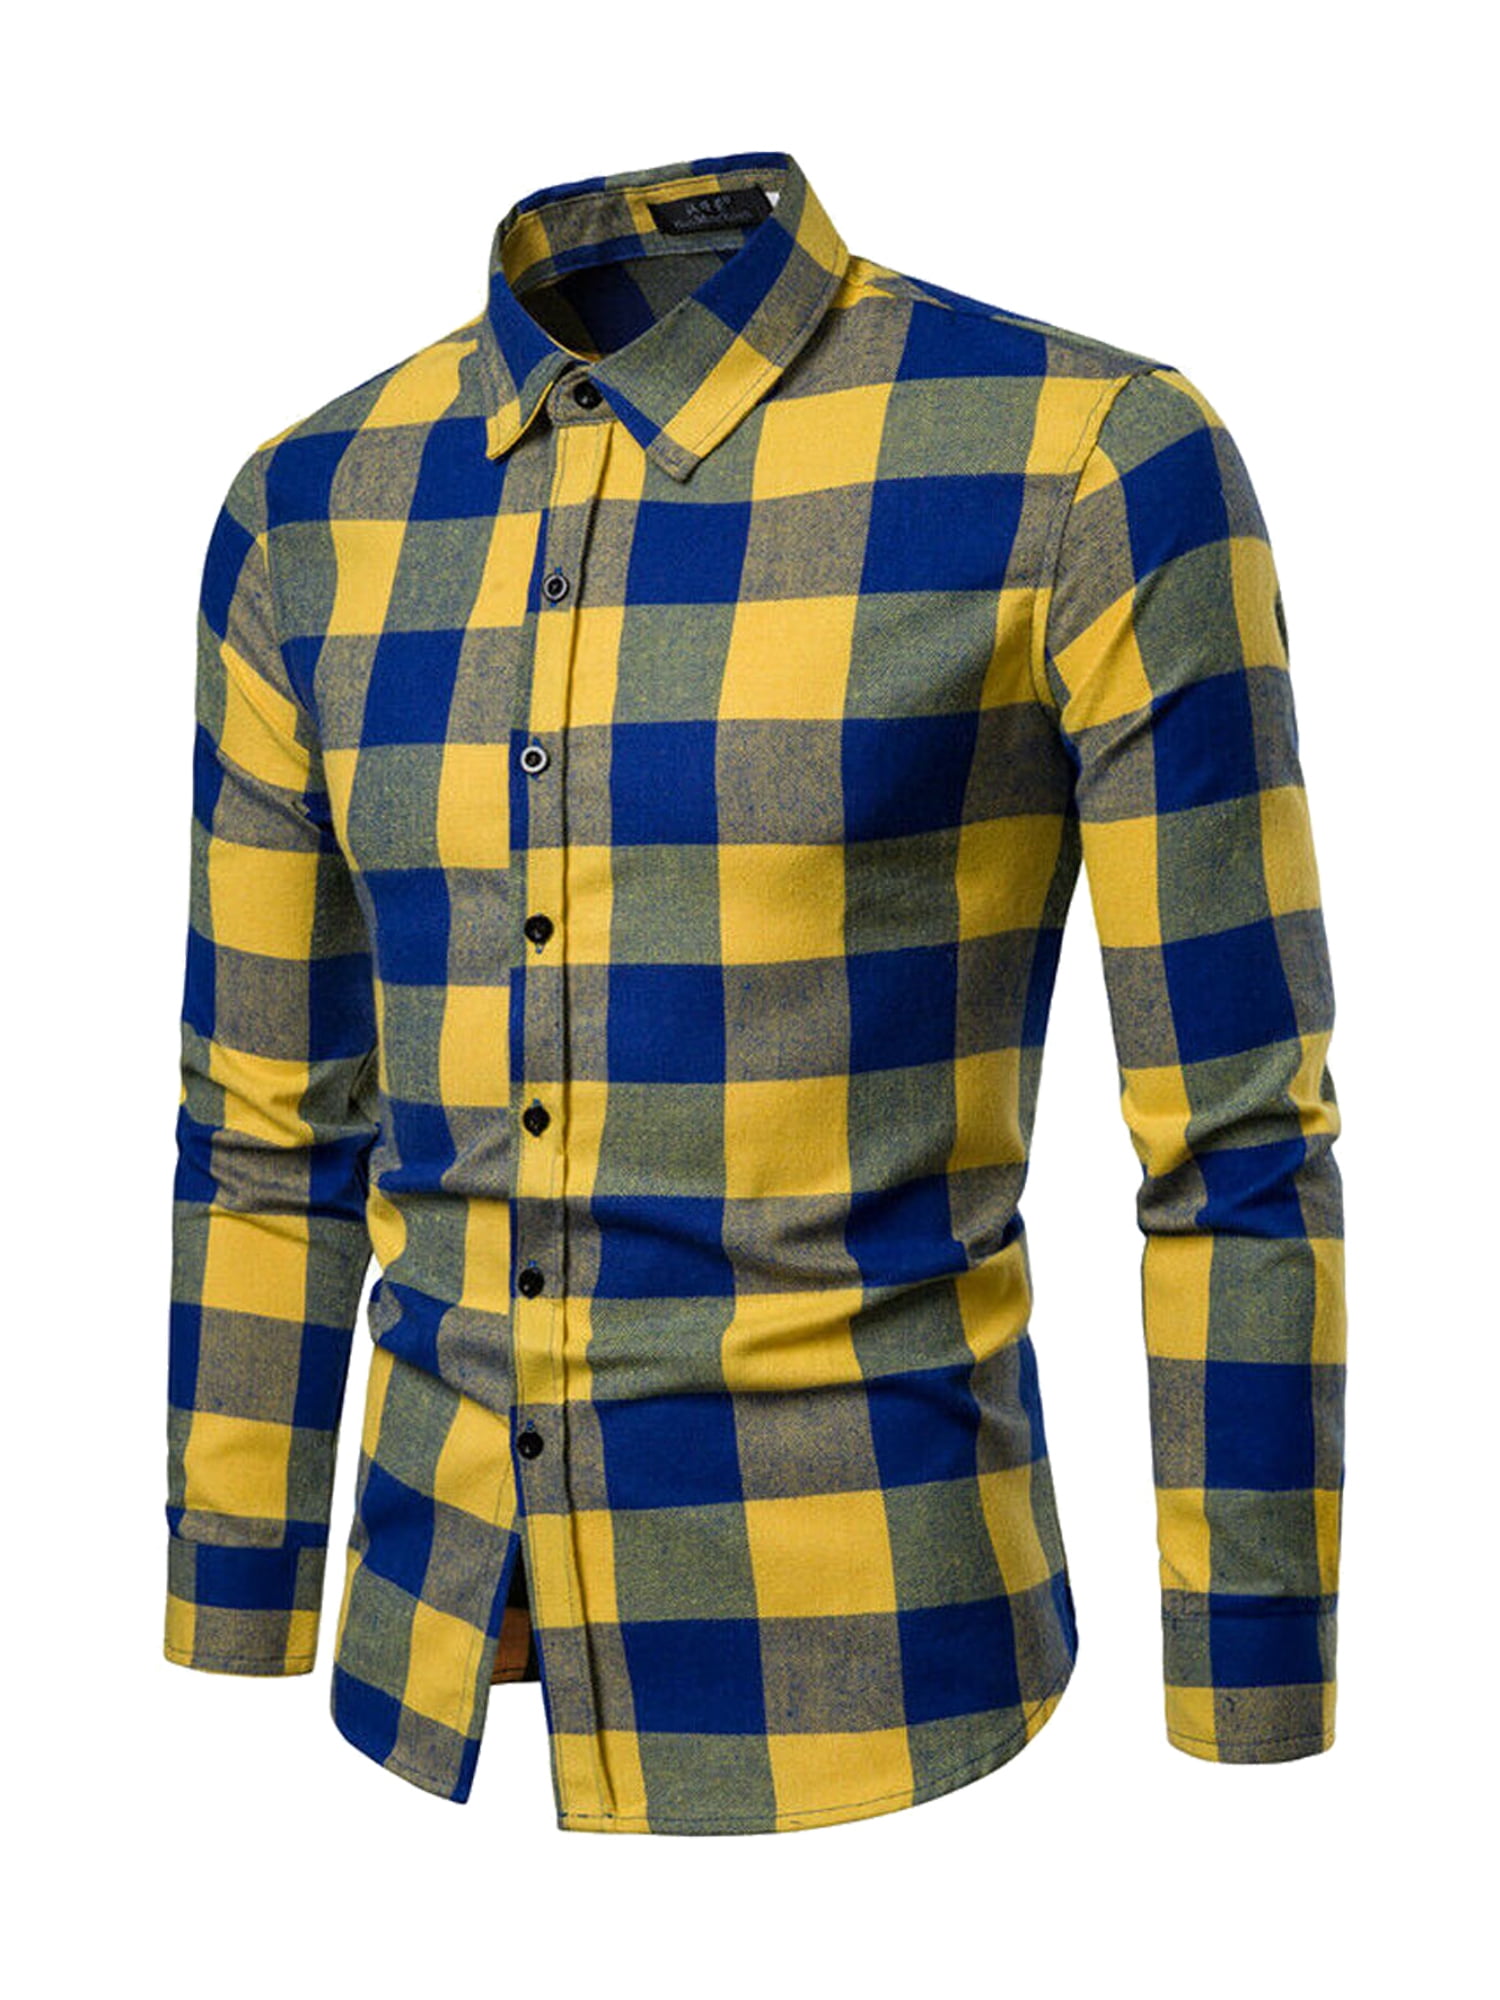 Men's Long Sleeve Plaid Shirt 100% pure cotton Male casual Check Shirts slim fit